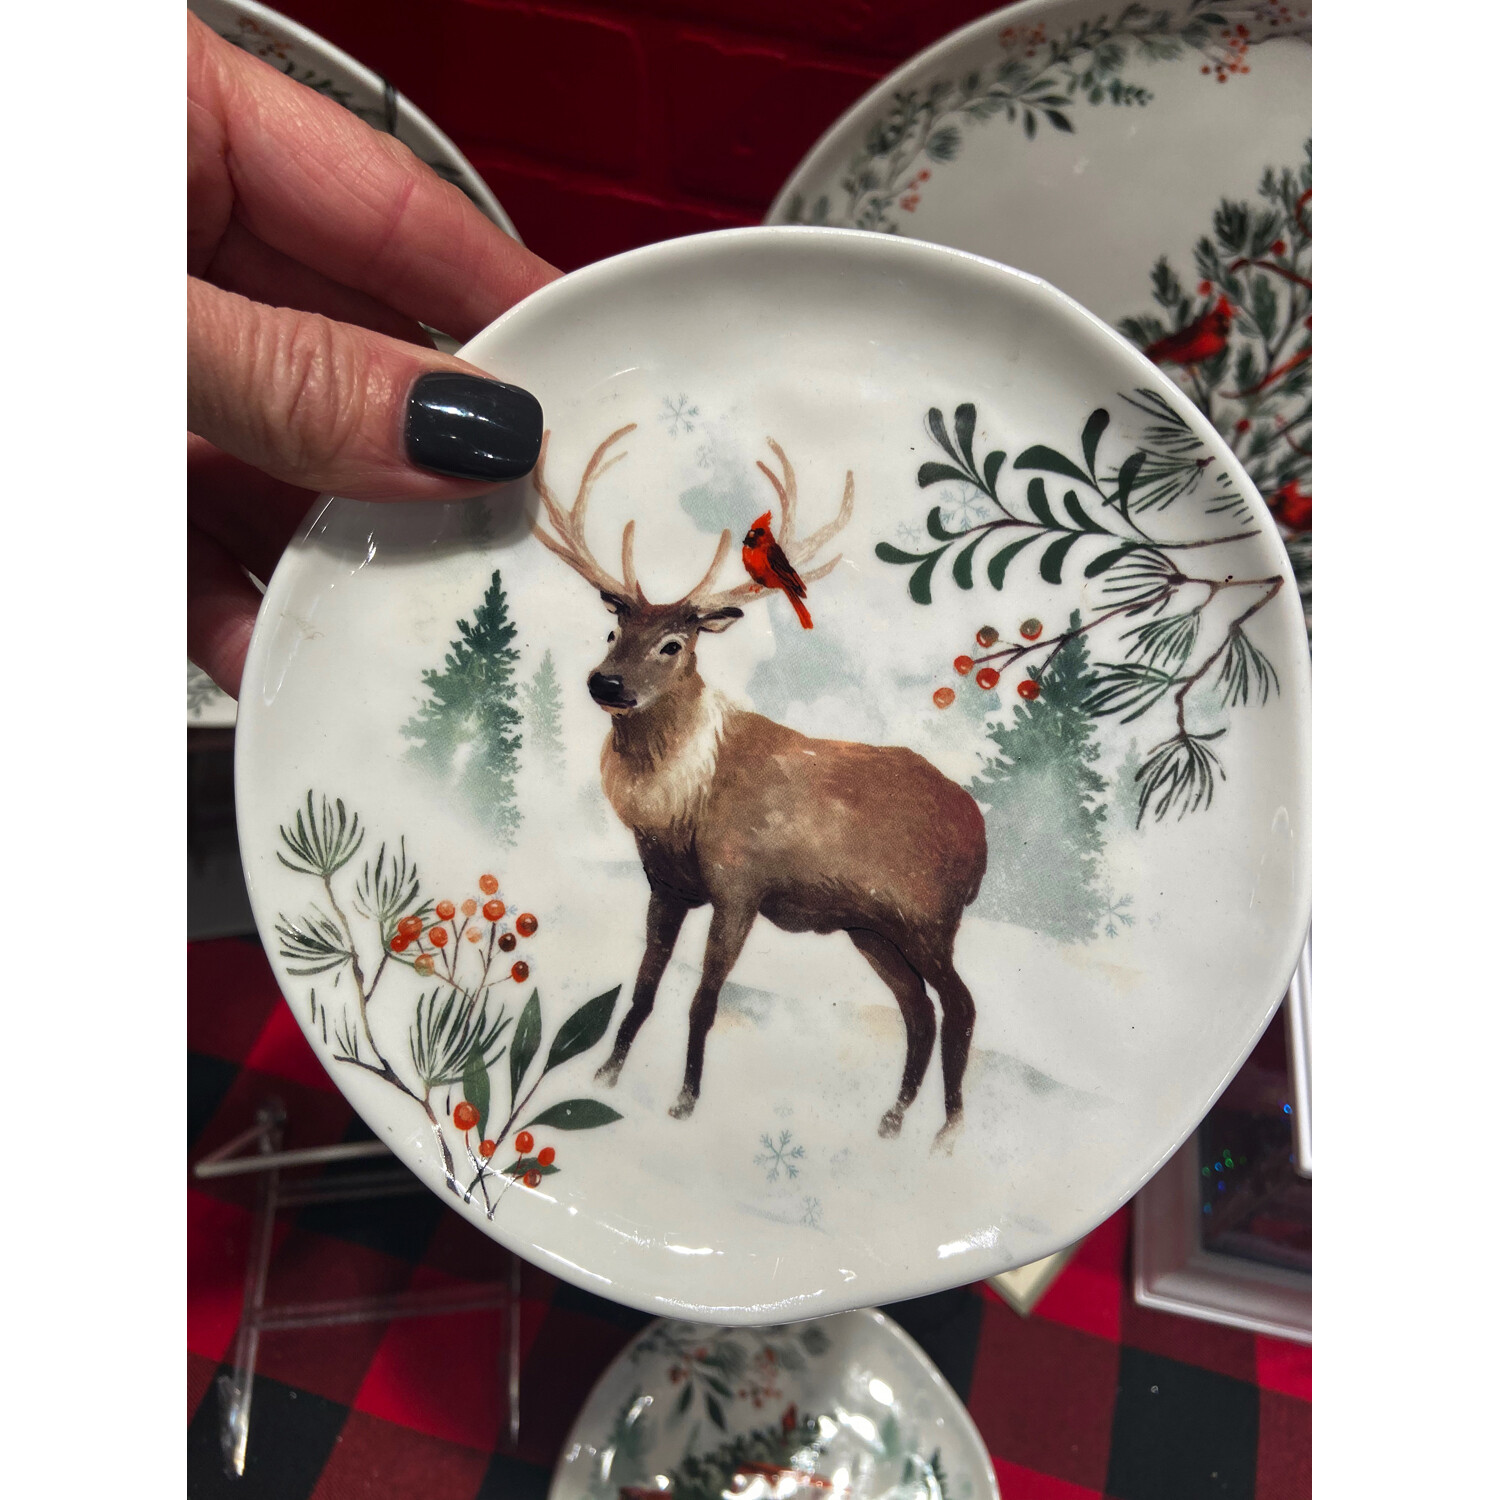 FINAL SALE - Heritage Christmas Ceramic Plate, 6"